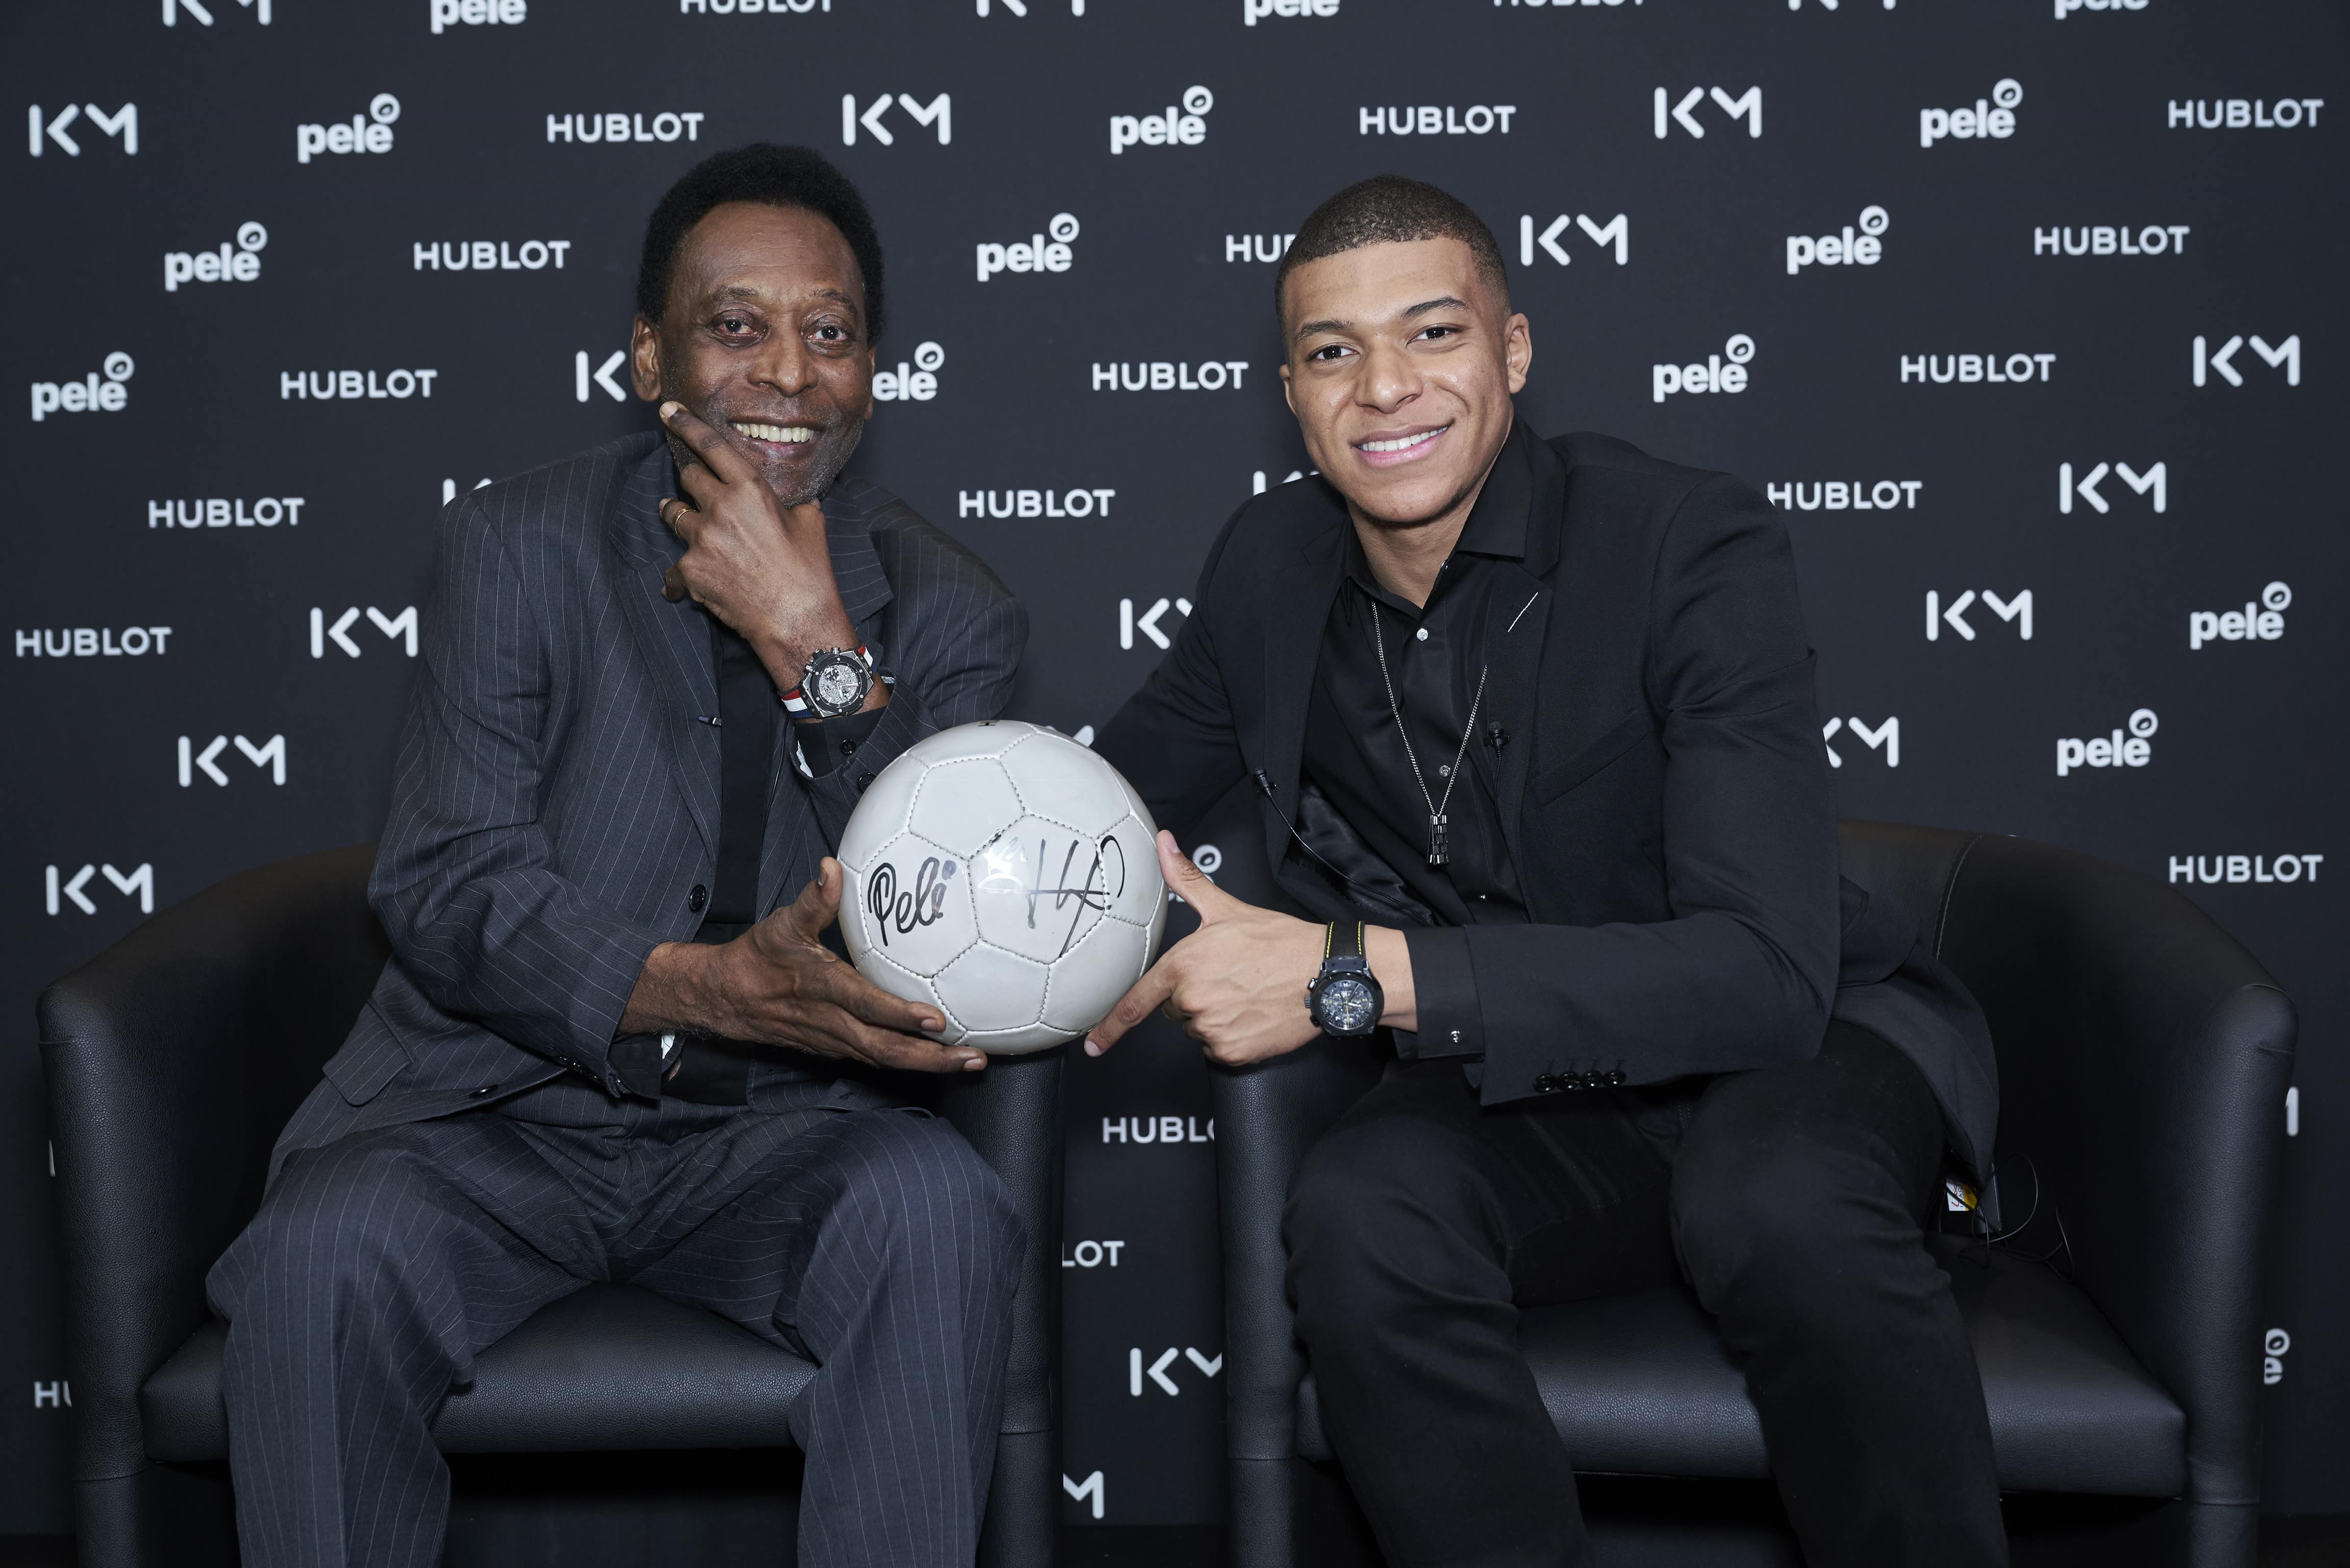 Hublot Brand Ambassdors Pelé & Kylian Mbappé Meet For The First Time In A Legendary Moment For Soccer